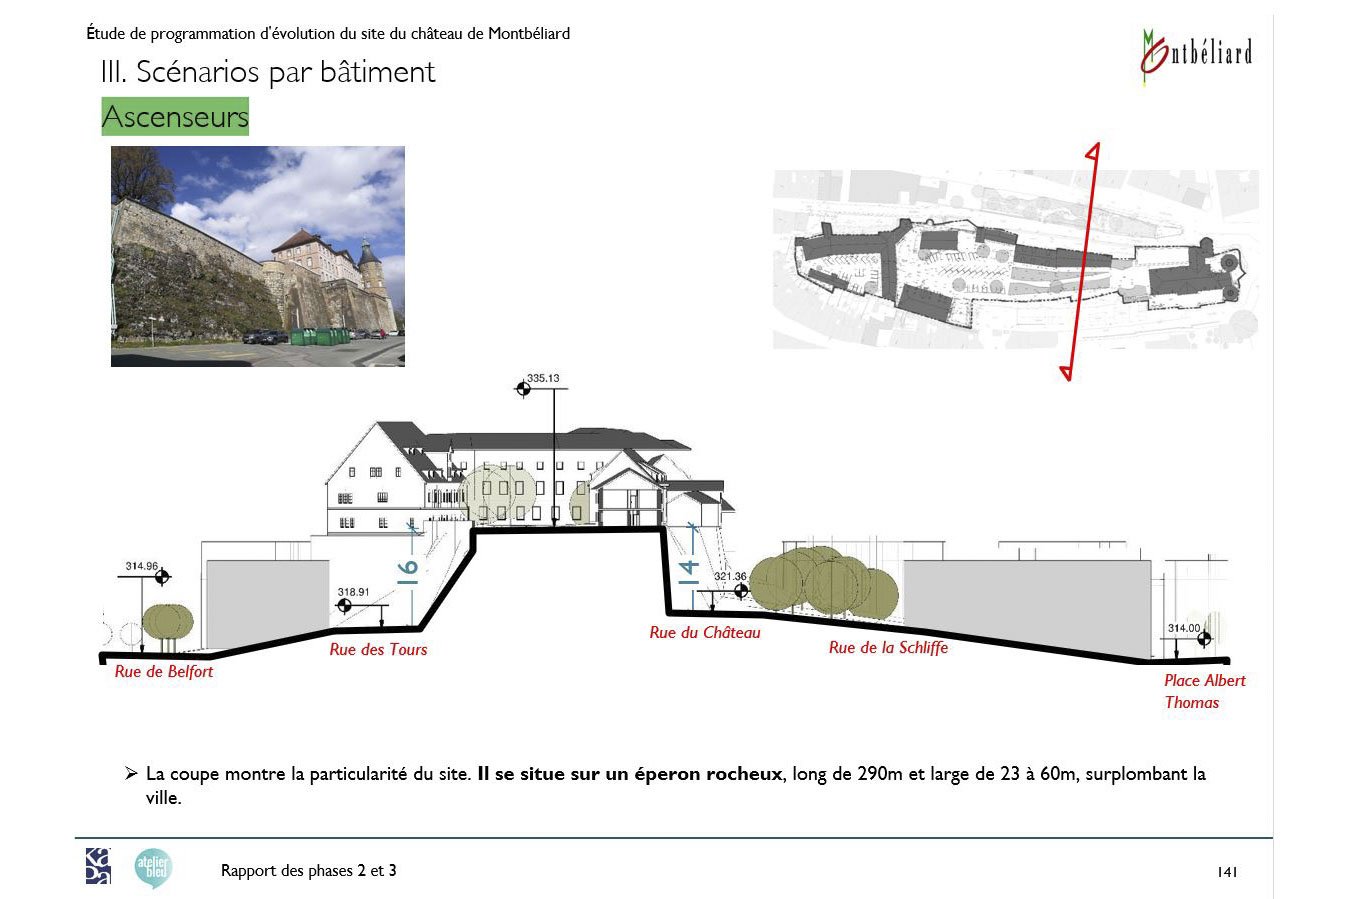 atelier-kapaa-architecture-patrimoine-urbanisme-programmation-site-du-chateau-montbeliard-09.jpg